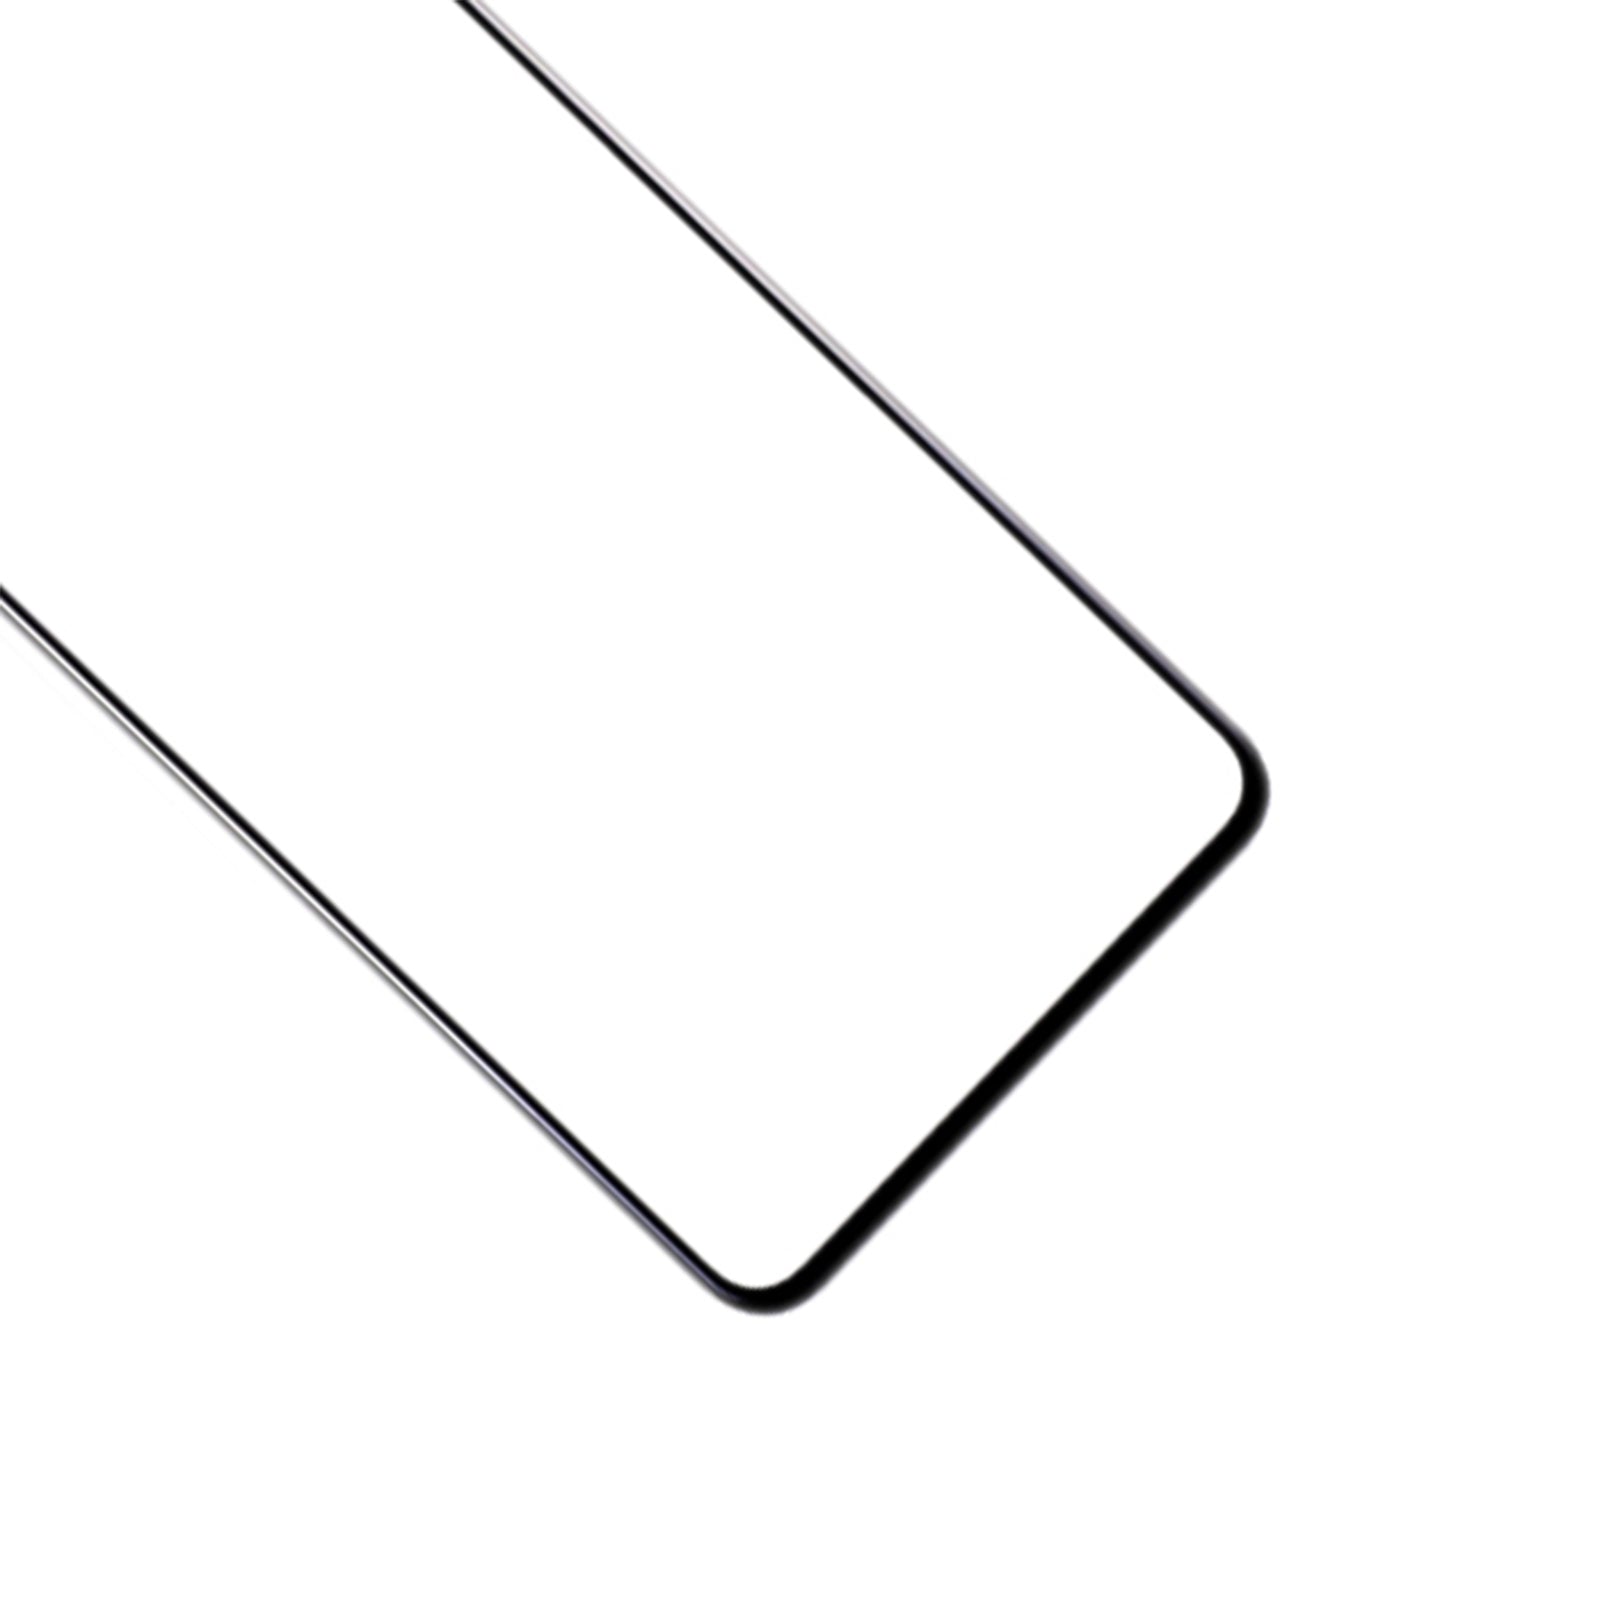 Front Screen Glass + OCA Adhesive OnePlus 9 / 9R